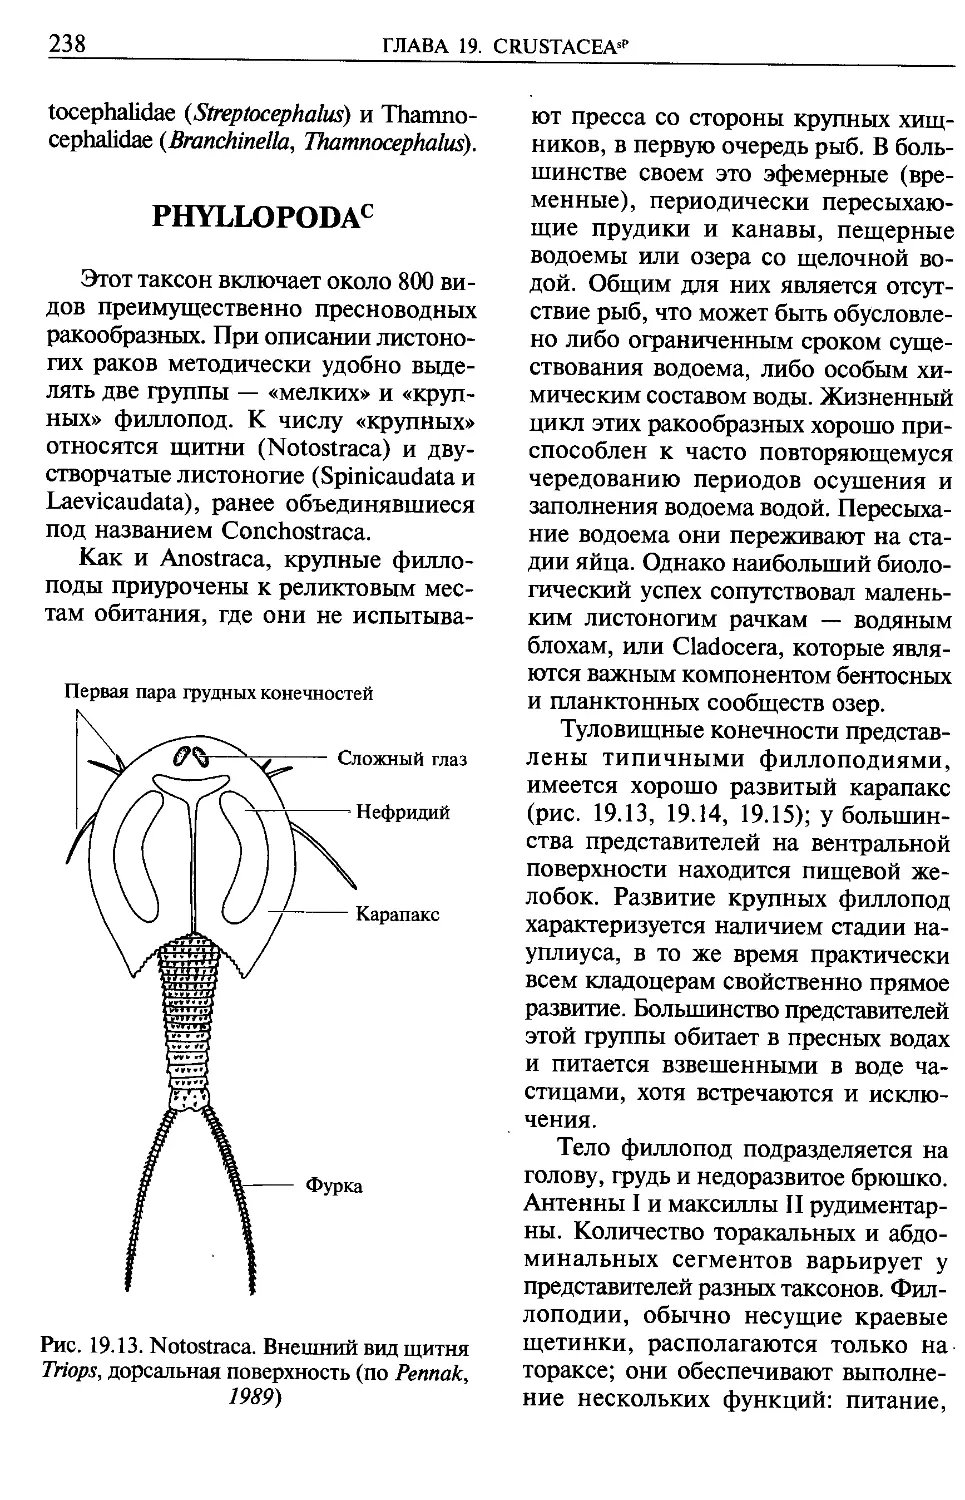 Phyllopoda